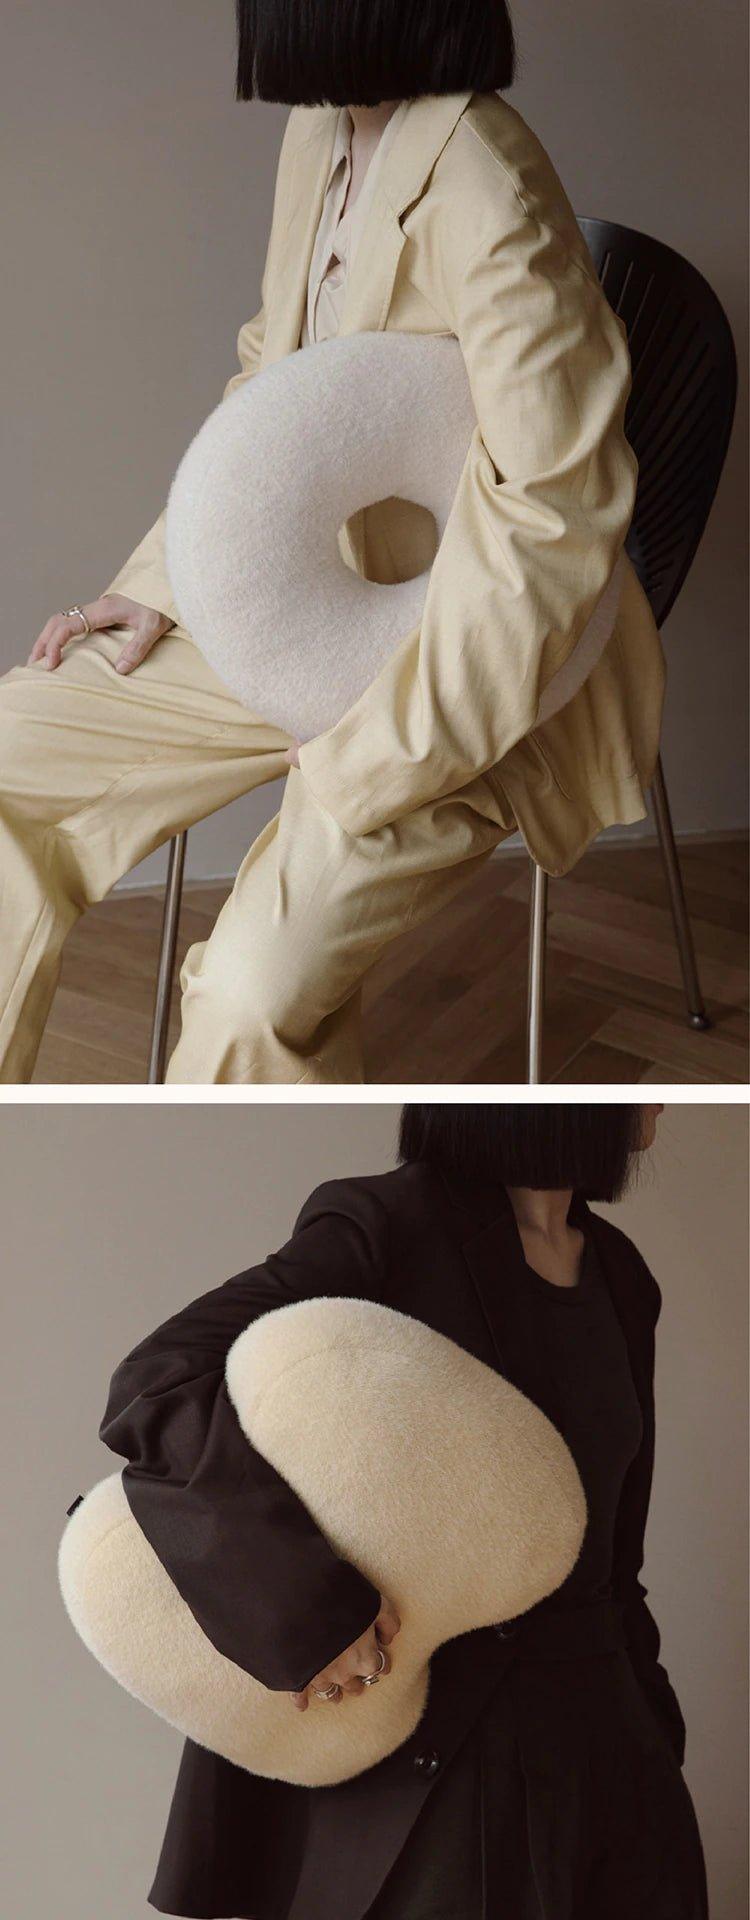 Geometric Solid Plush Sofa Cushions │ Neutral Tone Decorative Throw Pillows - Besontique